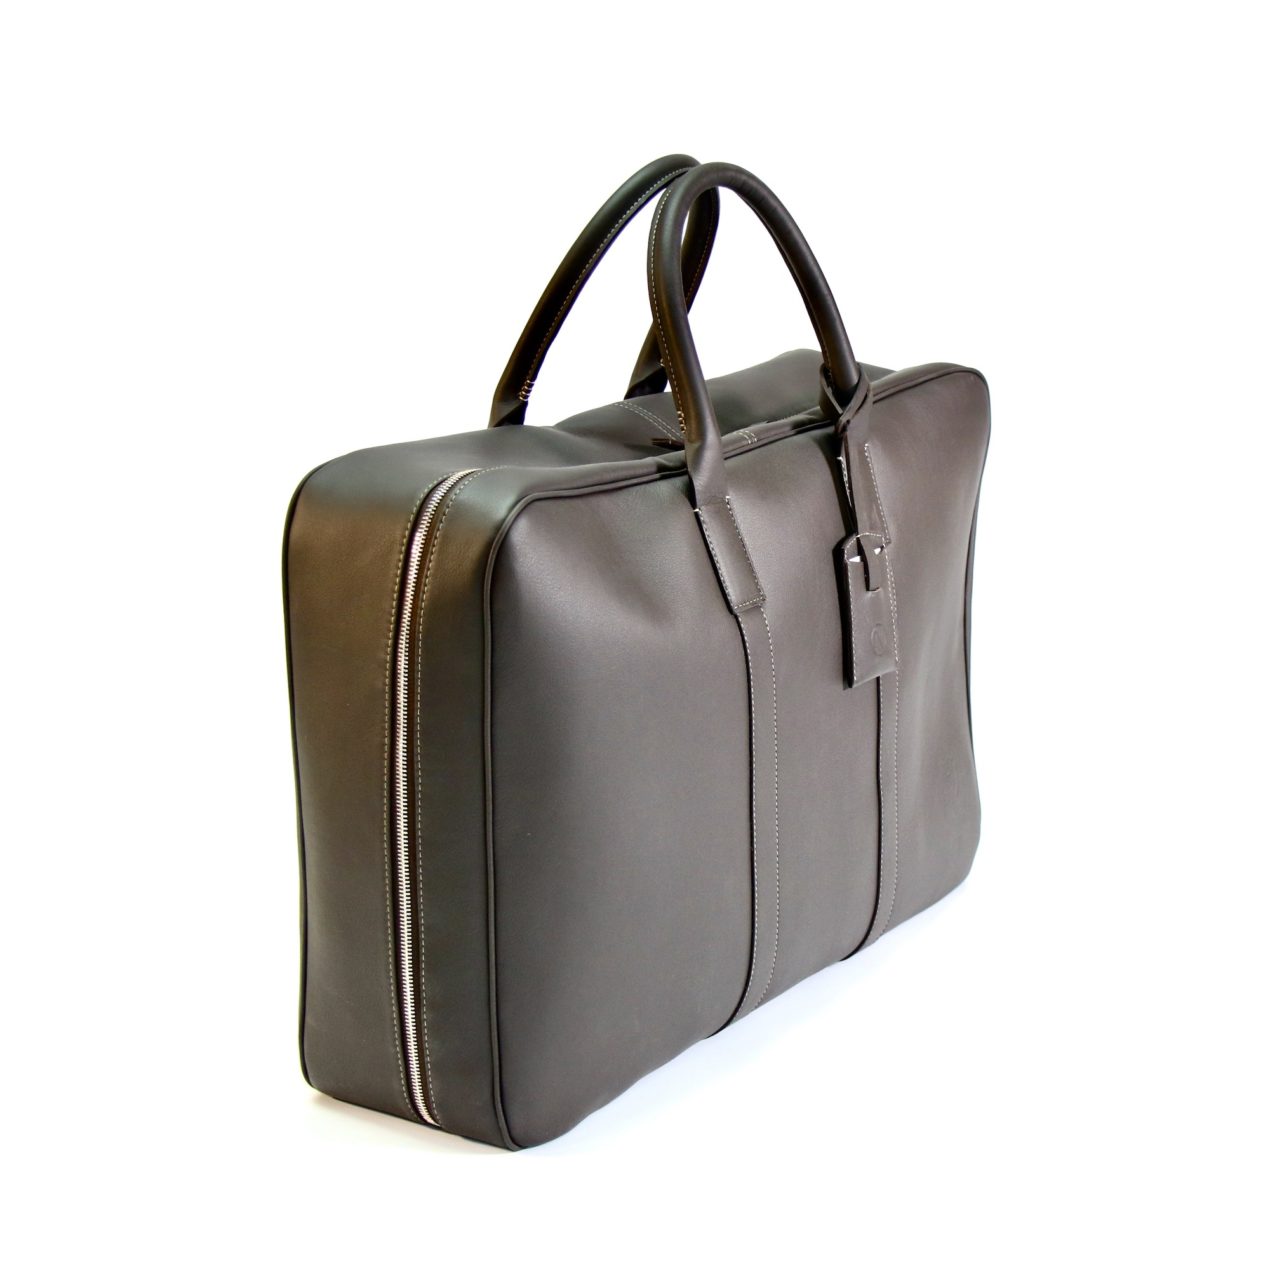 812 GTS luggage Poltrona Frau leather Ardesia SC29 Schedoni